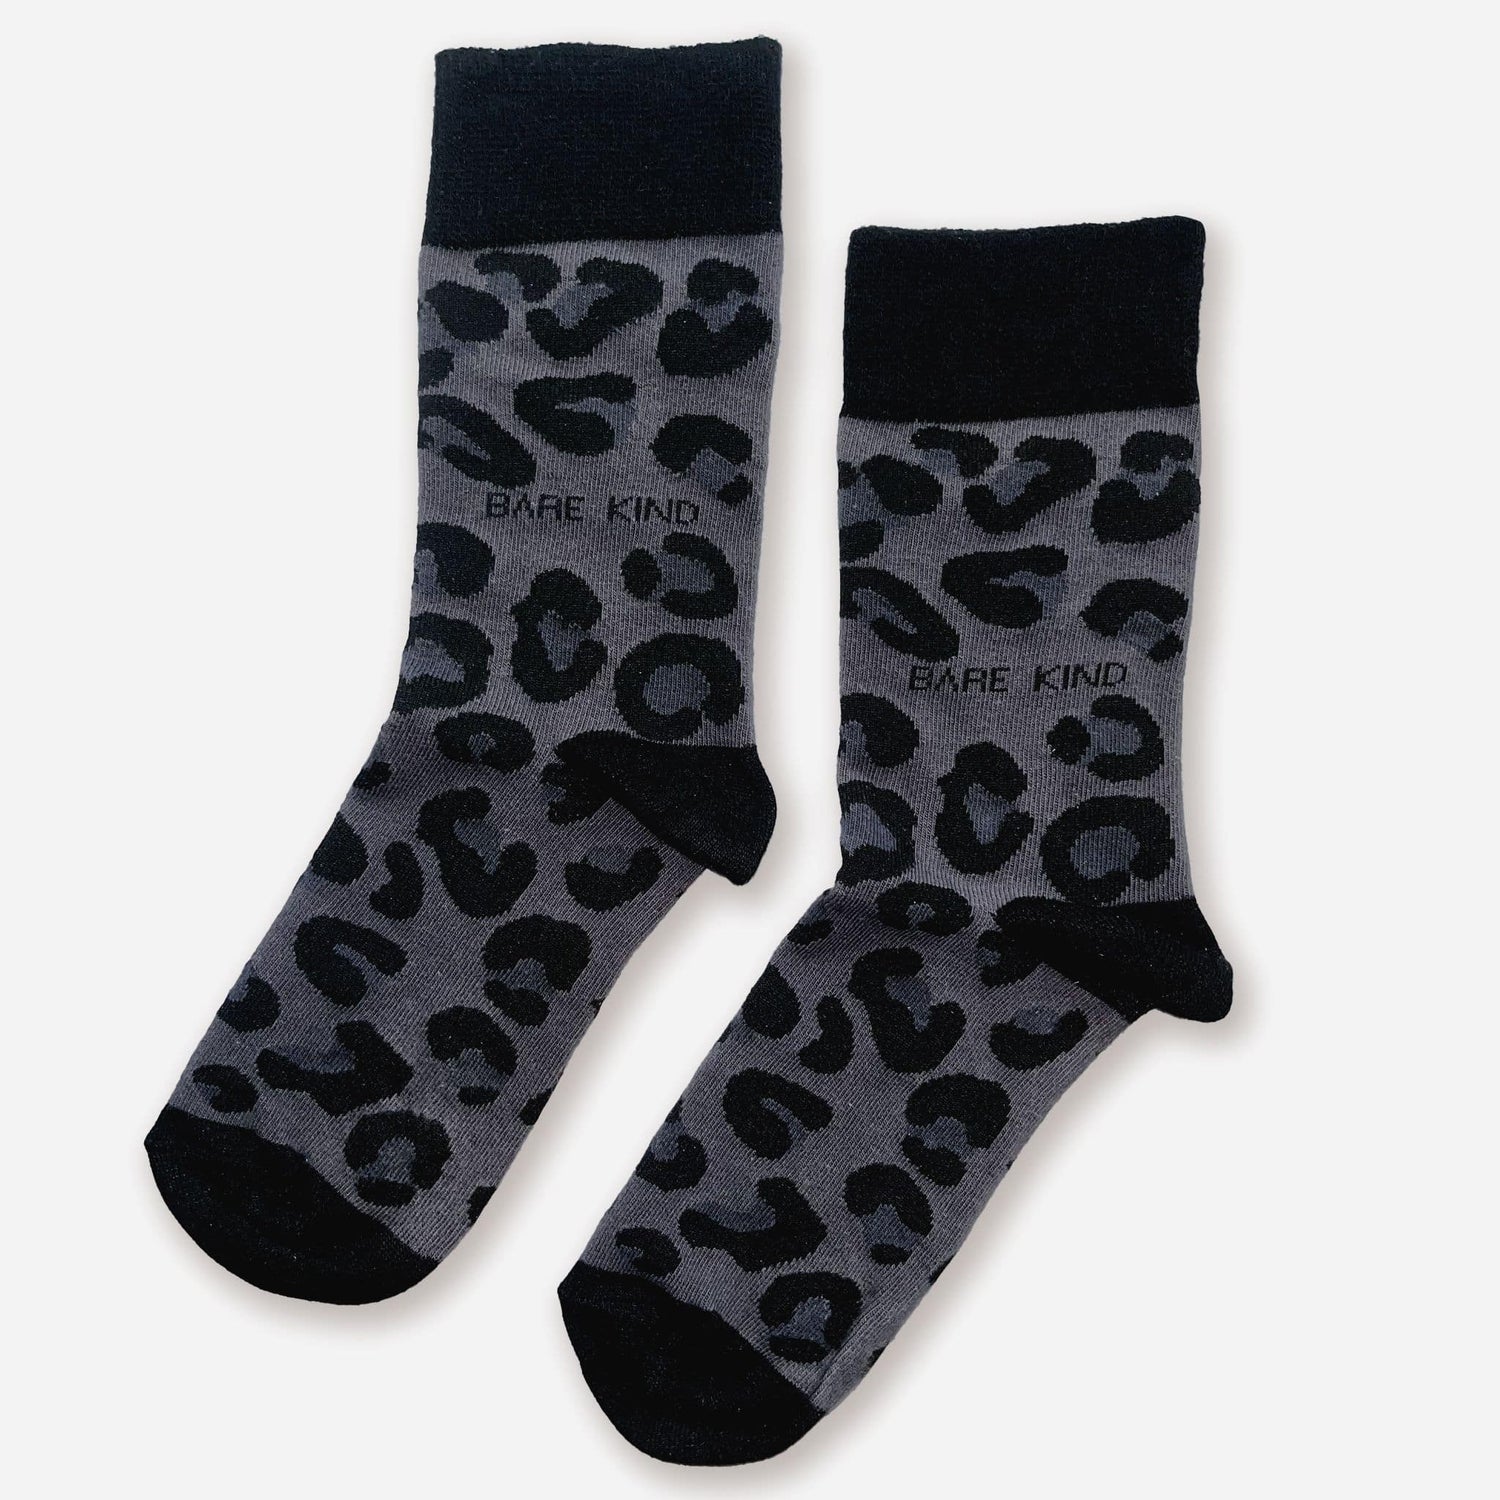 Panther Print Socks that Help Save Panthers - pair of socks